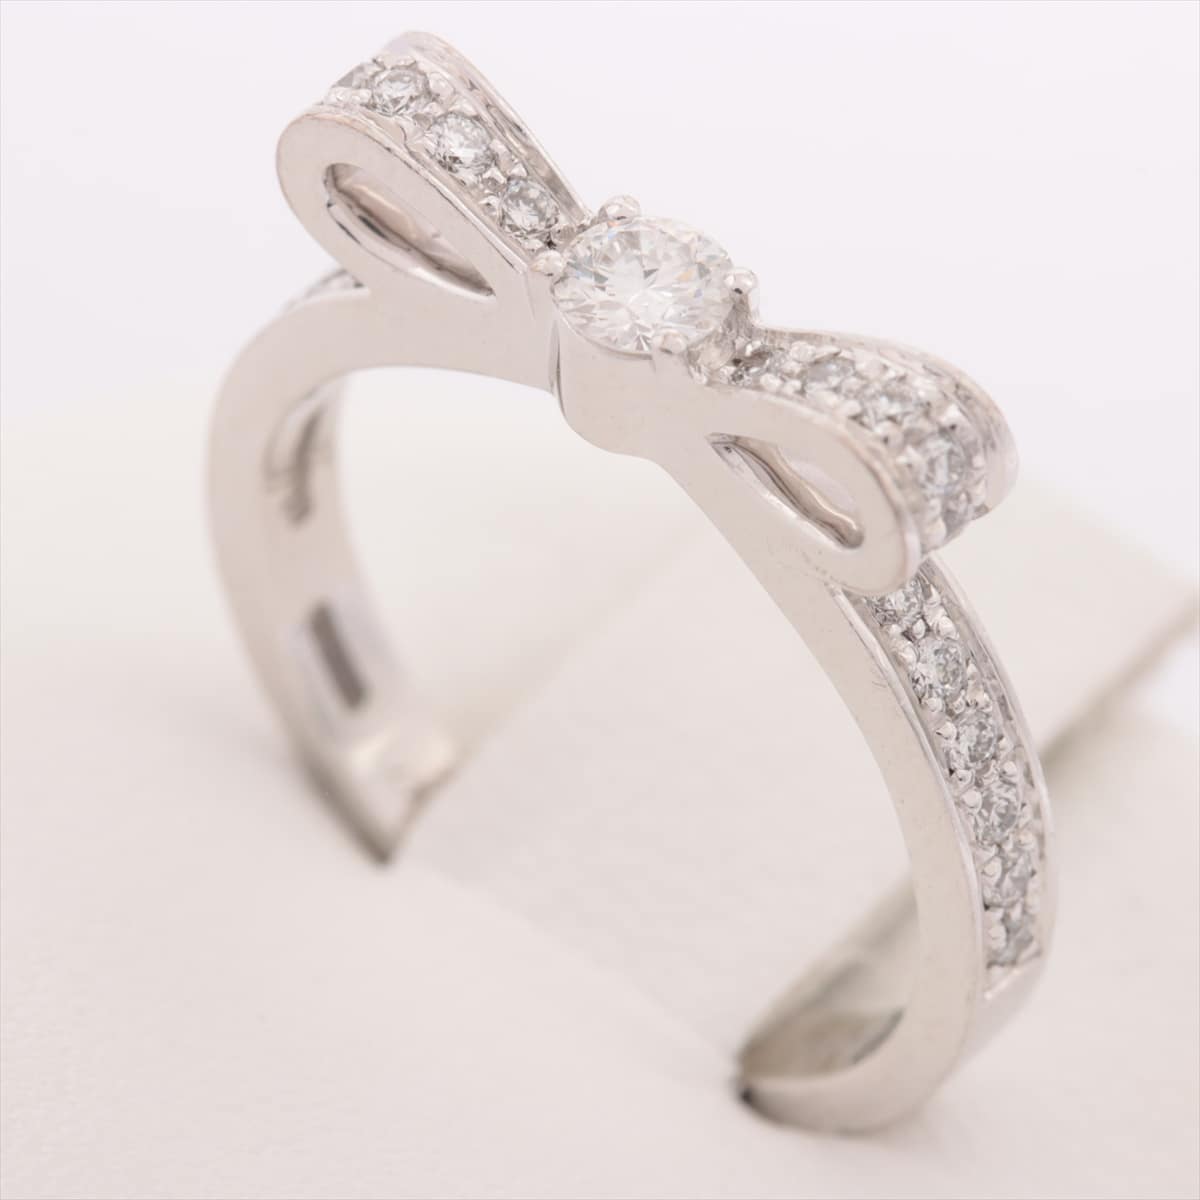 Chanel Ruban Doo Chanel diamond rings 750(WG) 3.0g 47